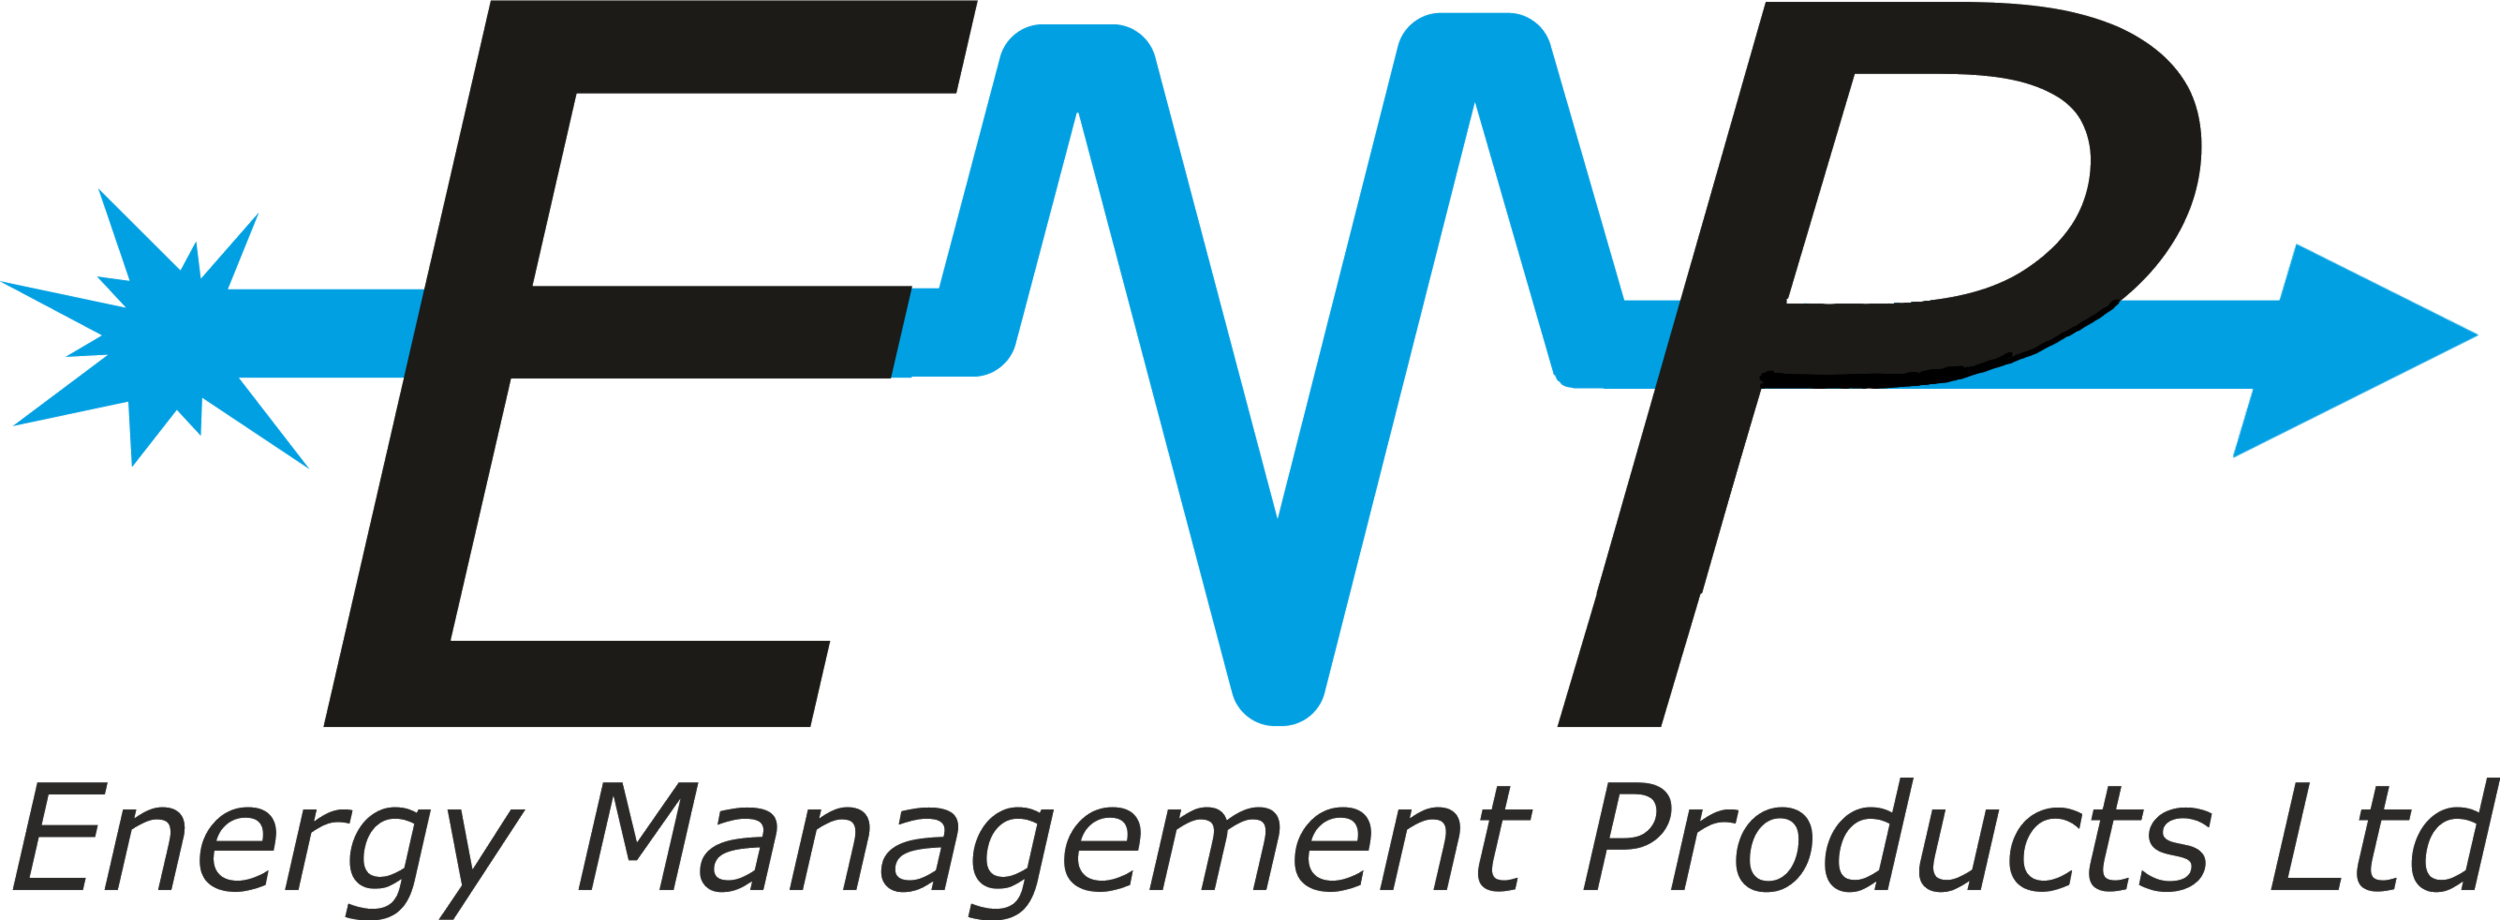 EMP, Energy Management Professionals